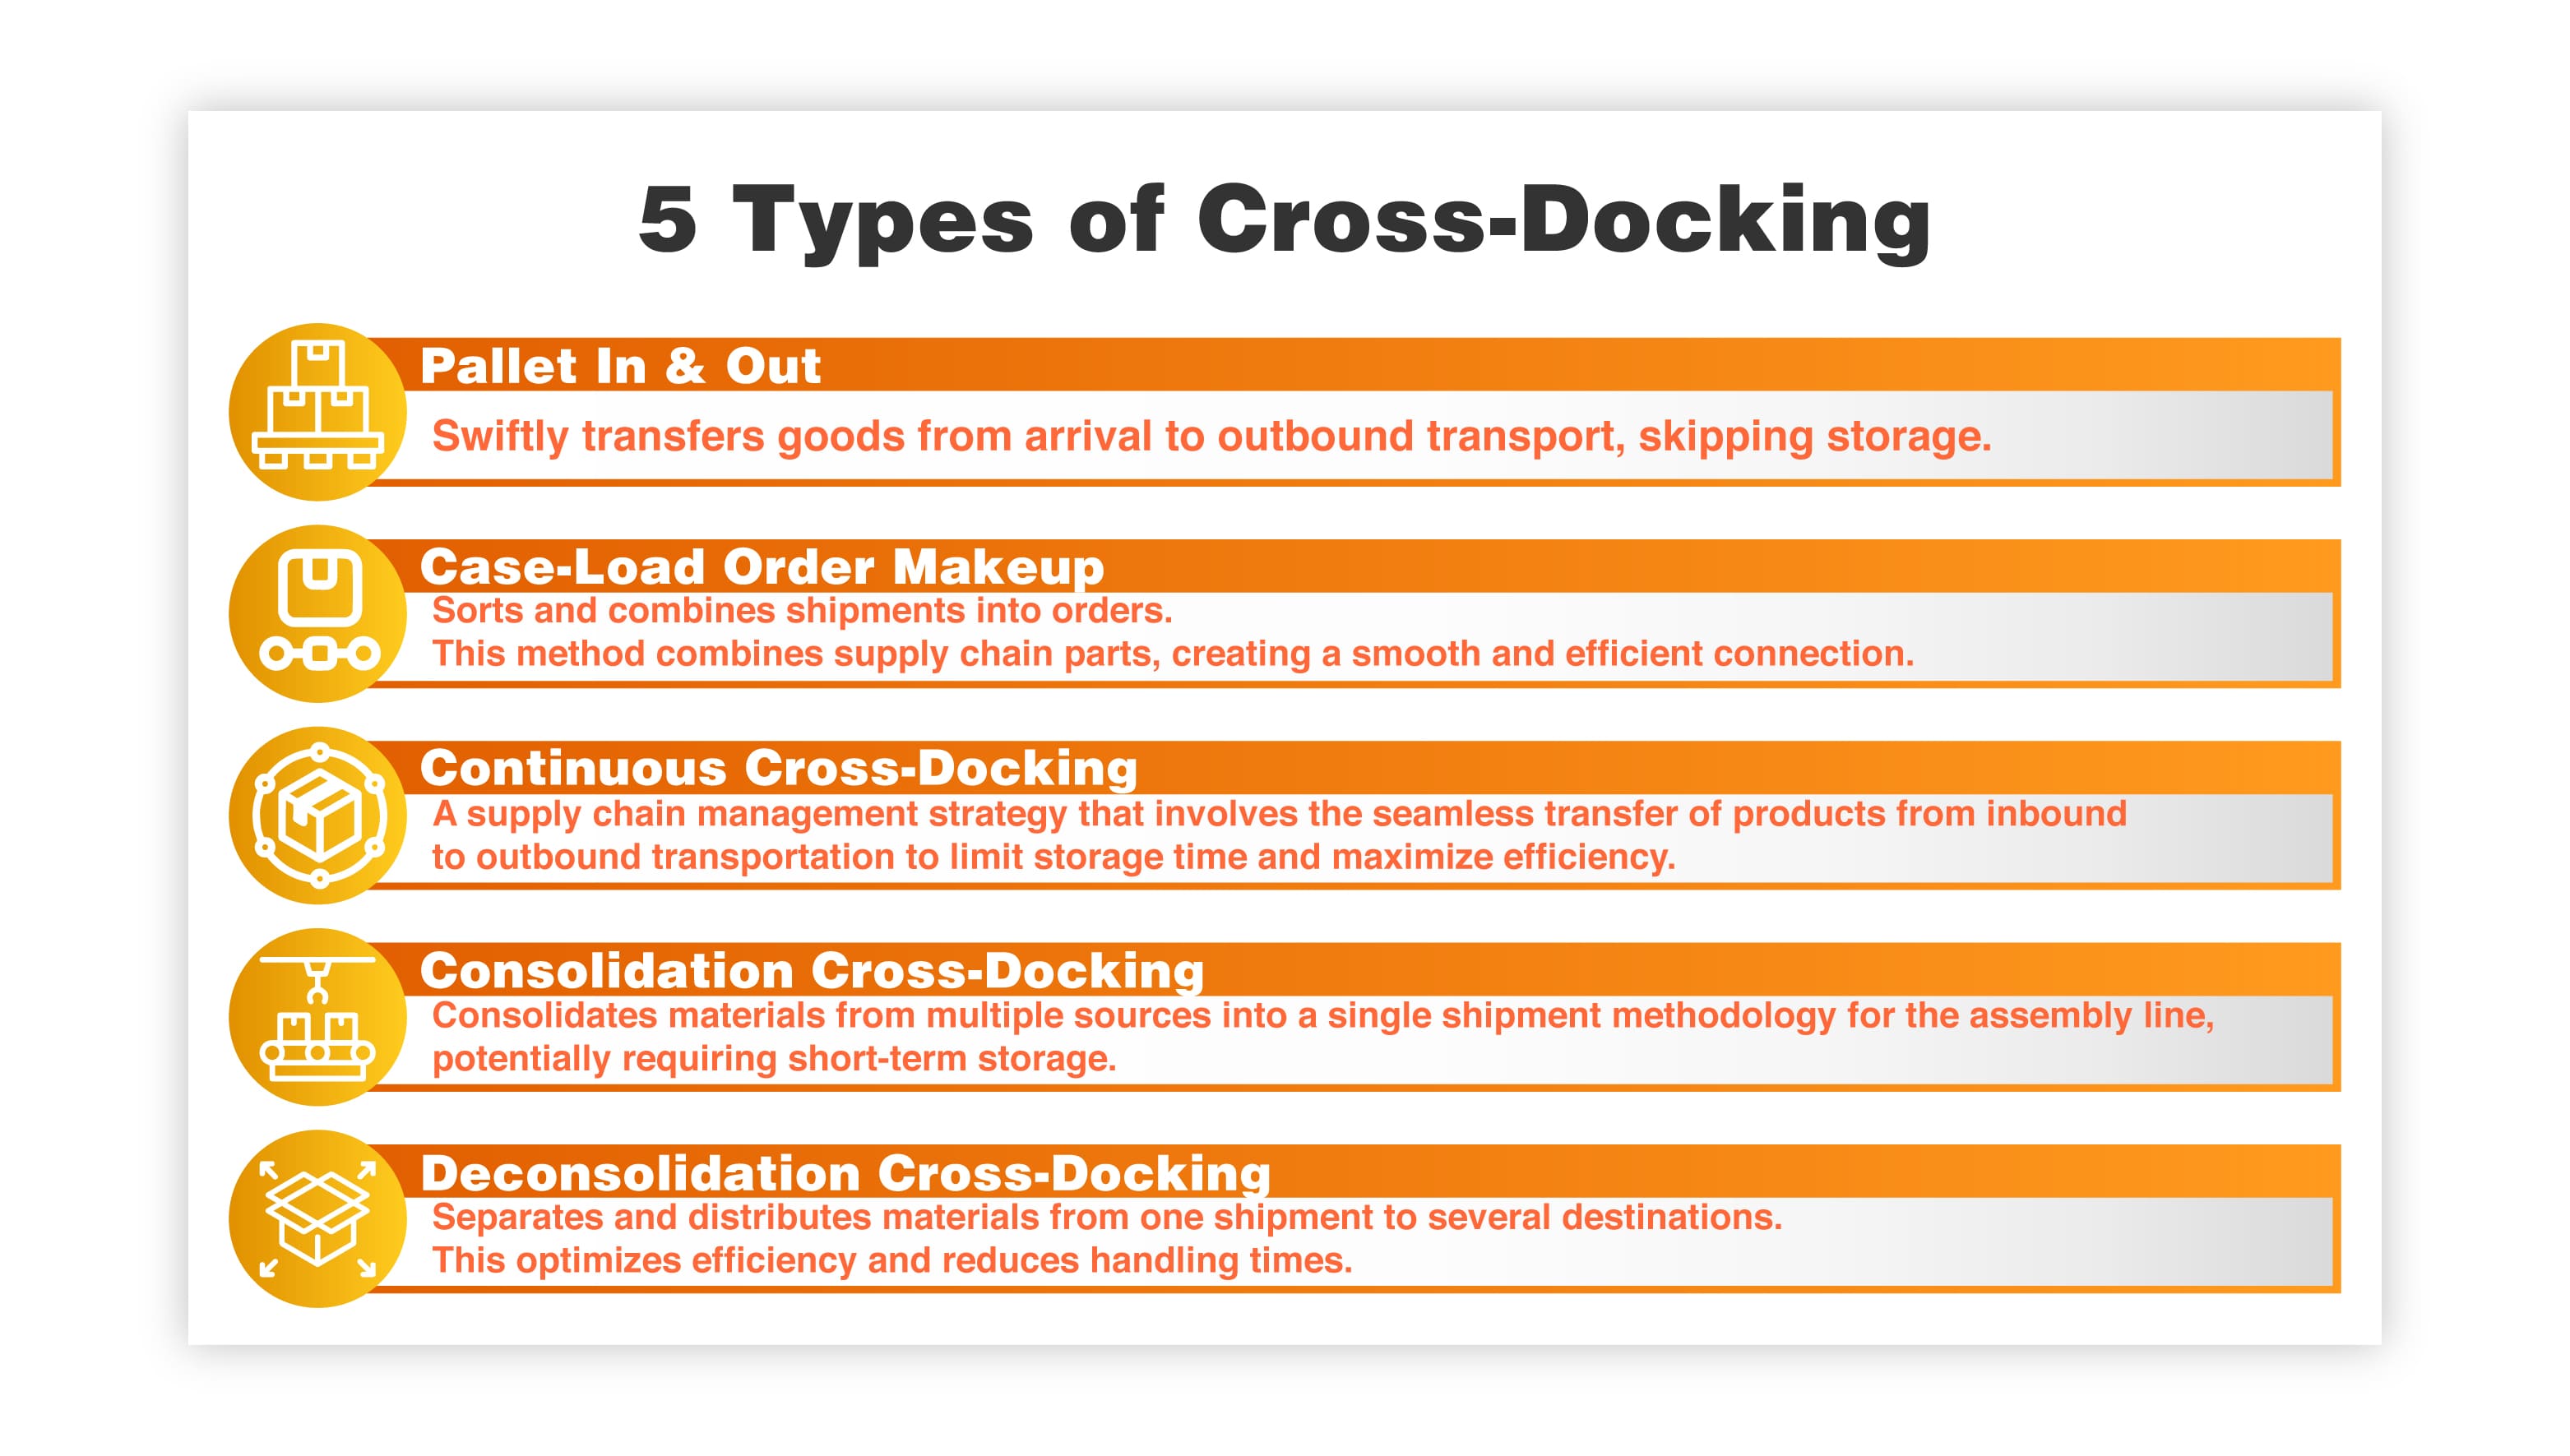 5 Types of Cross-Docking